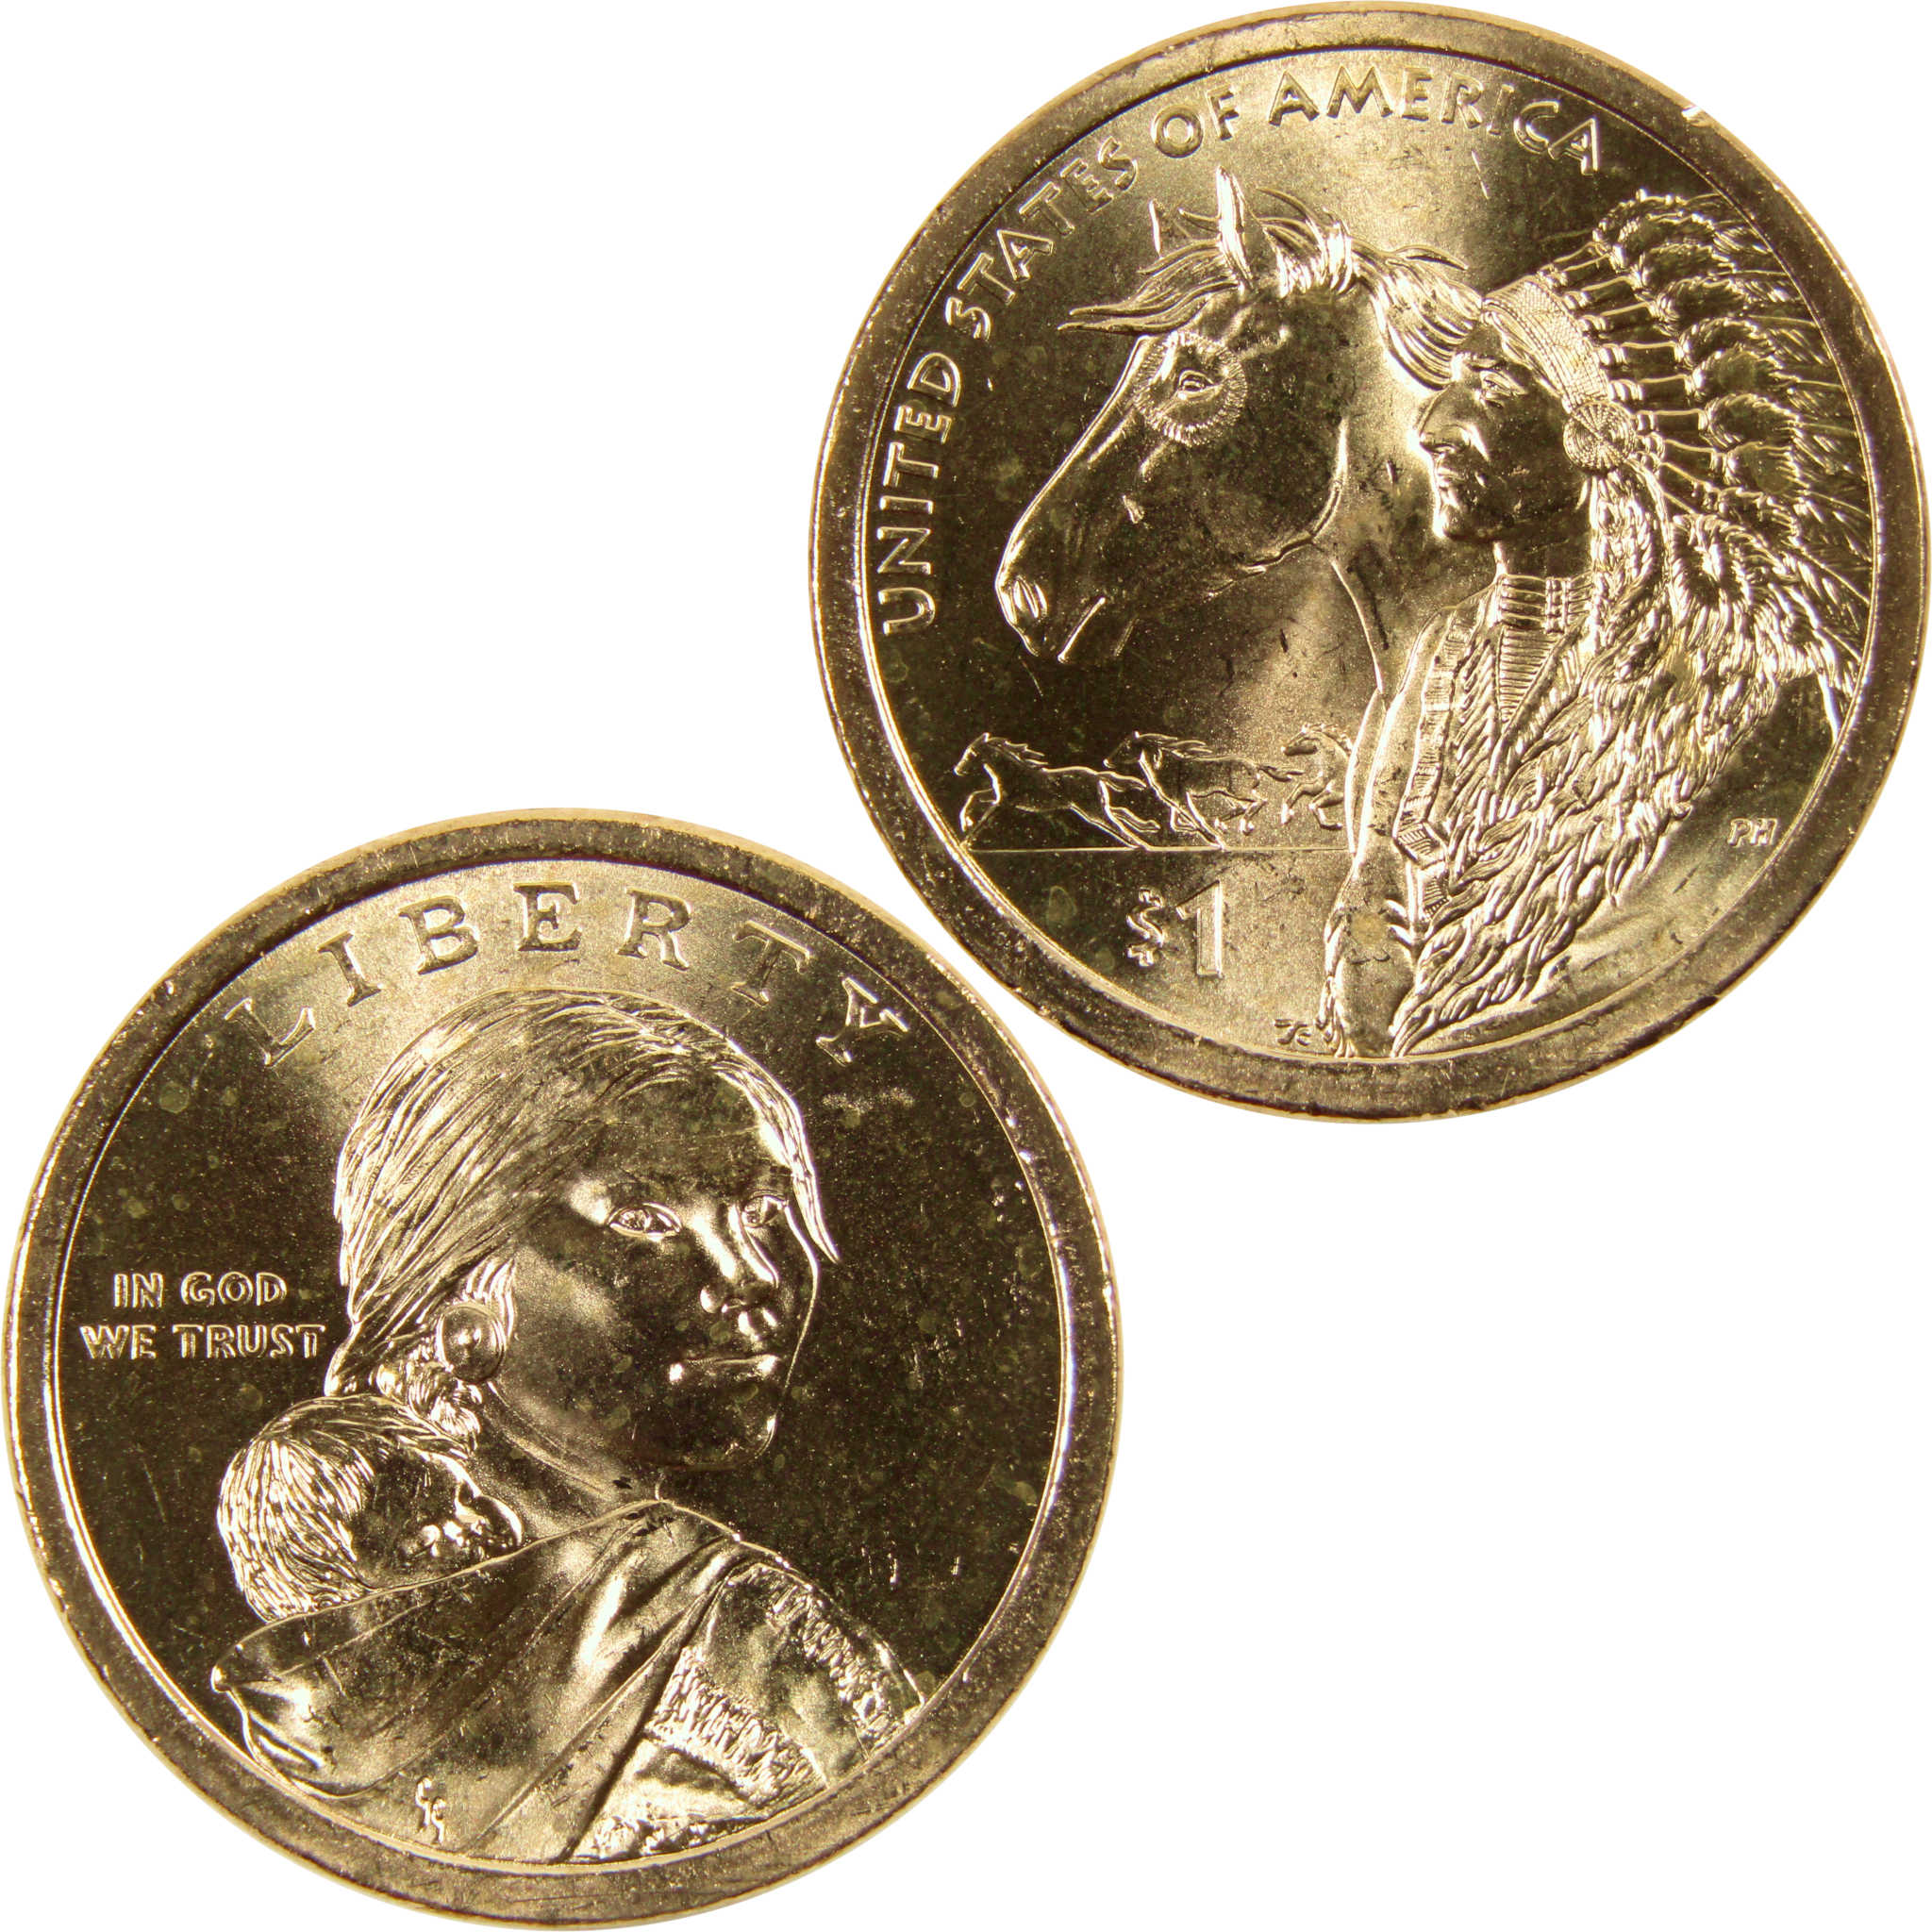 2012 P Trade Routes Native American Dollar BU Uncirculated $1 Coin